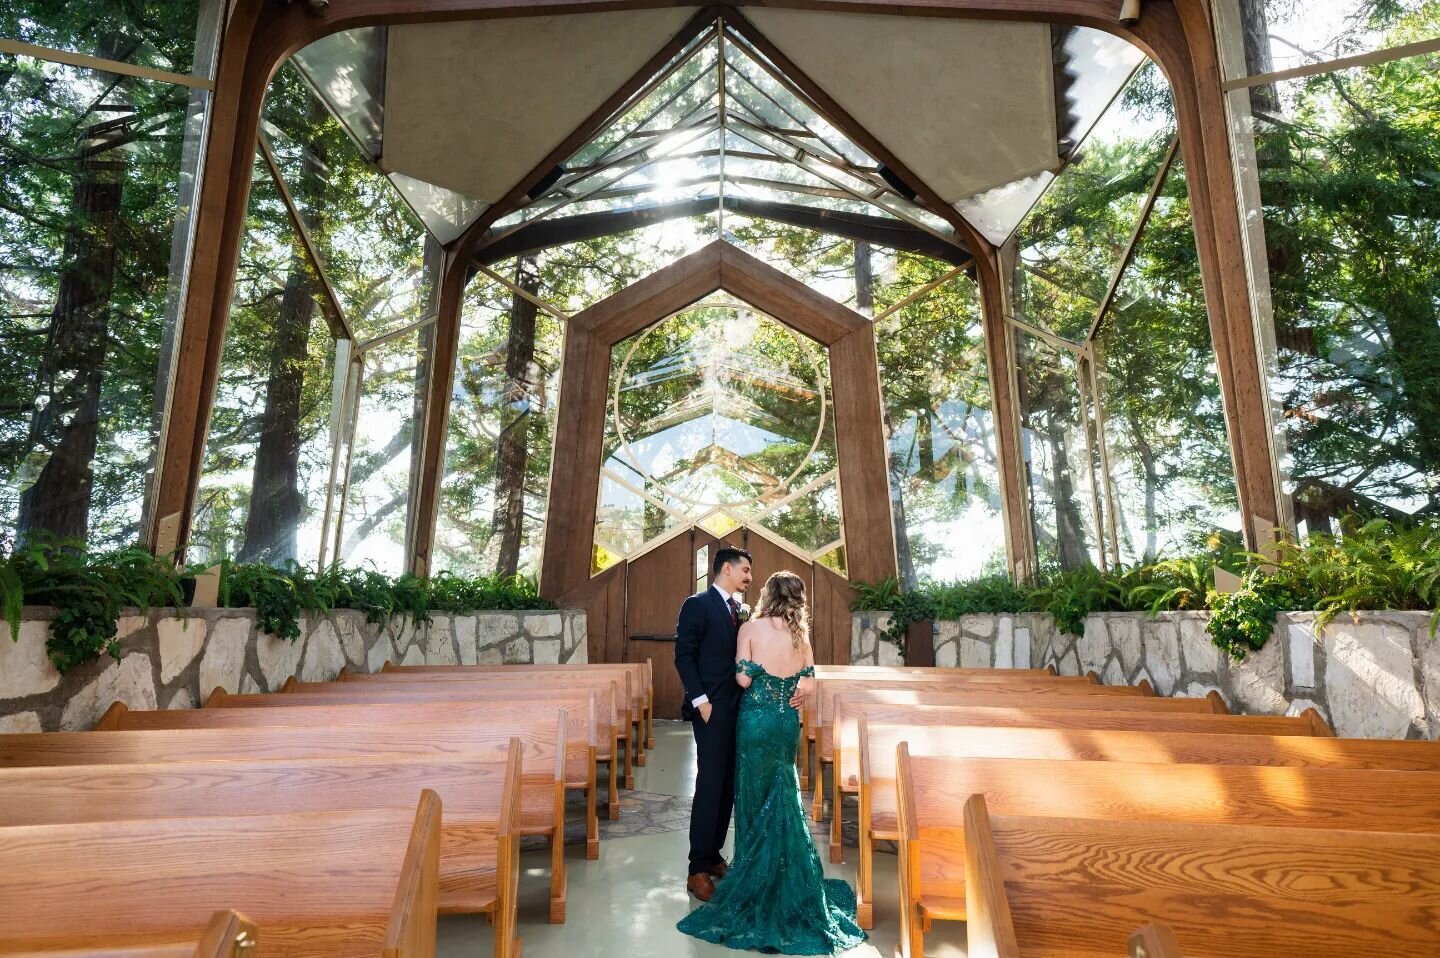 Always a beautiful time at @wayfarers_chapel 

@kittenbeans donned this gorgeous emerald dress for her wedding with @deegrei
.
.
.
.
.
#weddingchapel #losangelesweddingphotographer #weddingdresses #weddingphotoideas #weddingphotoinspiration #glasscha